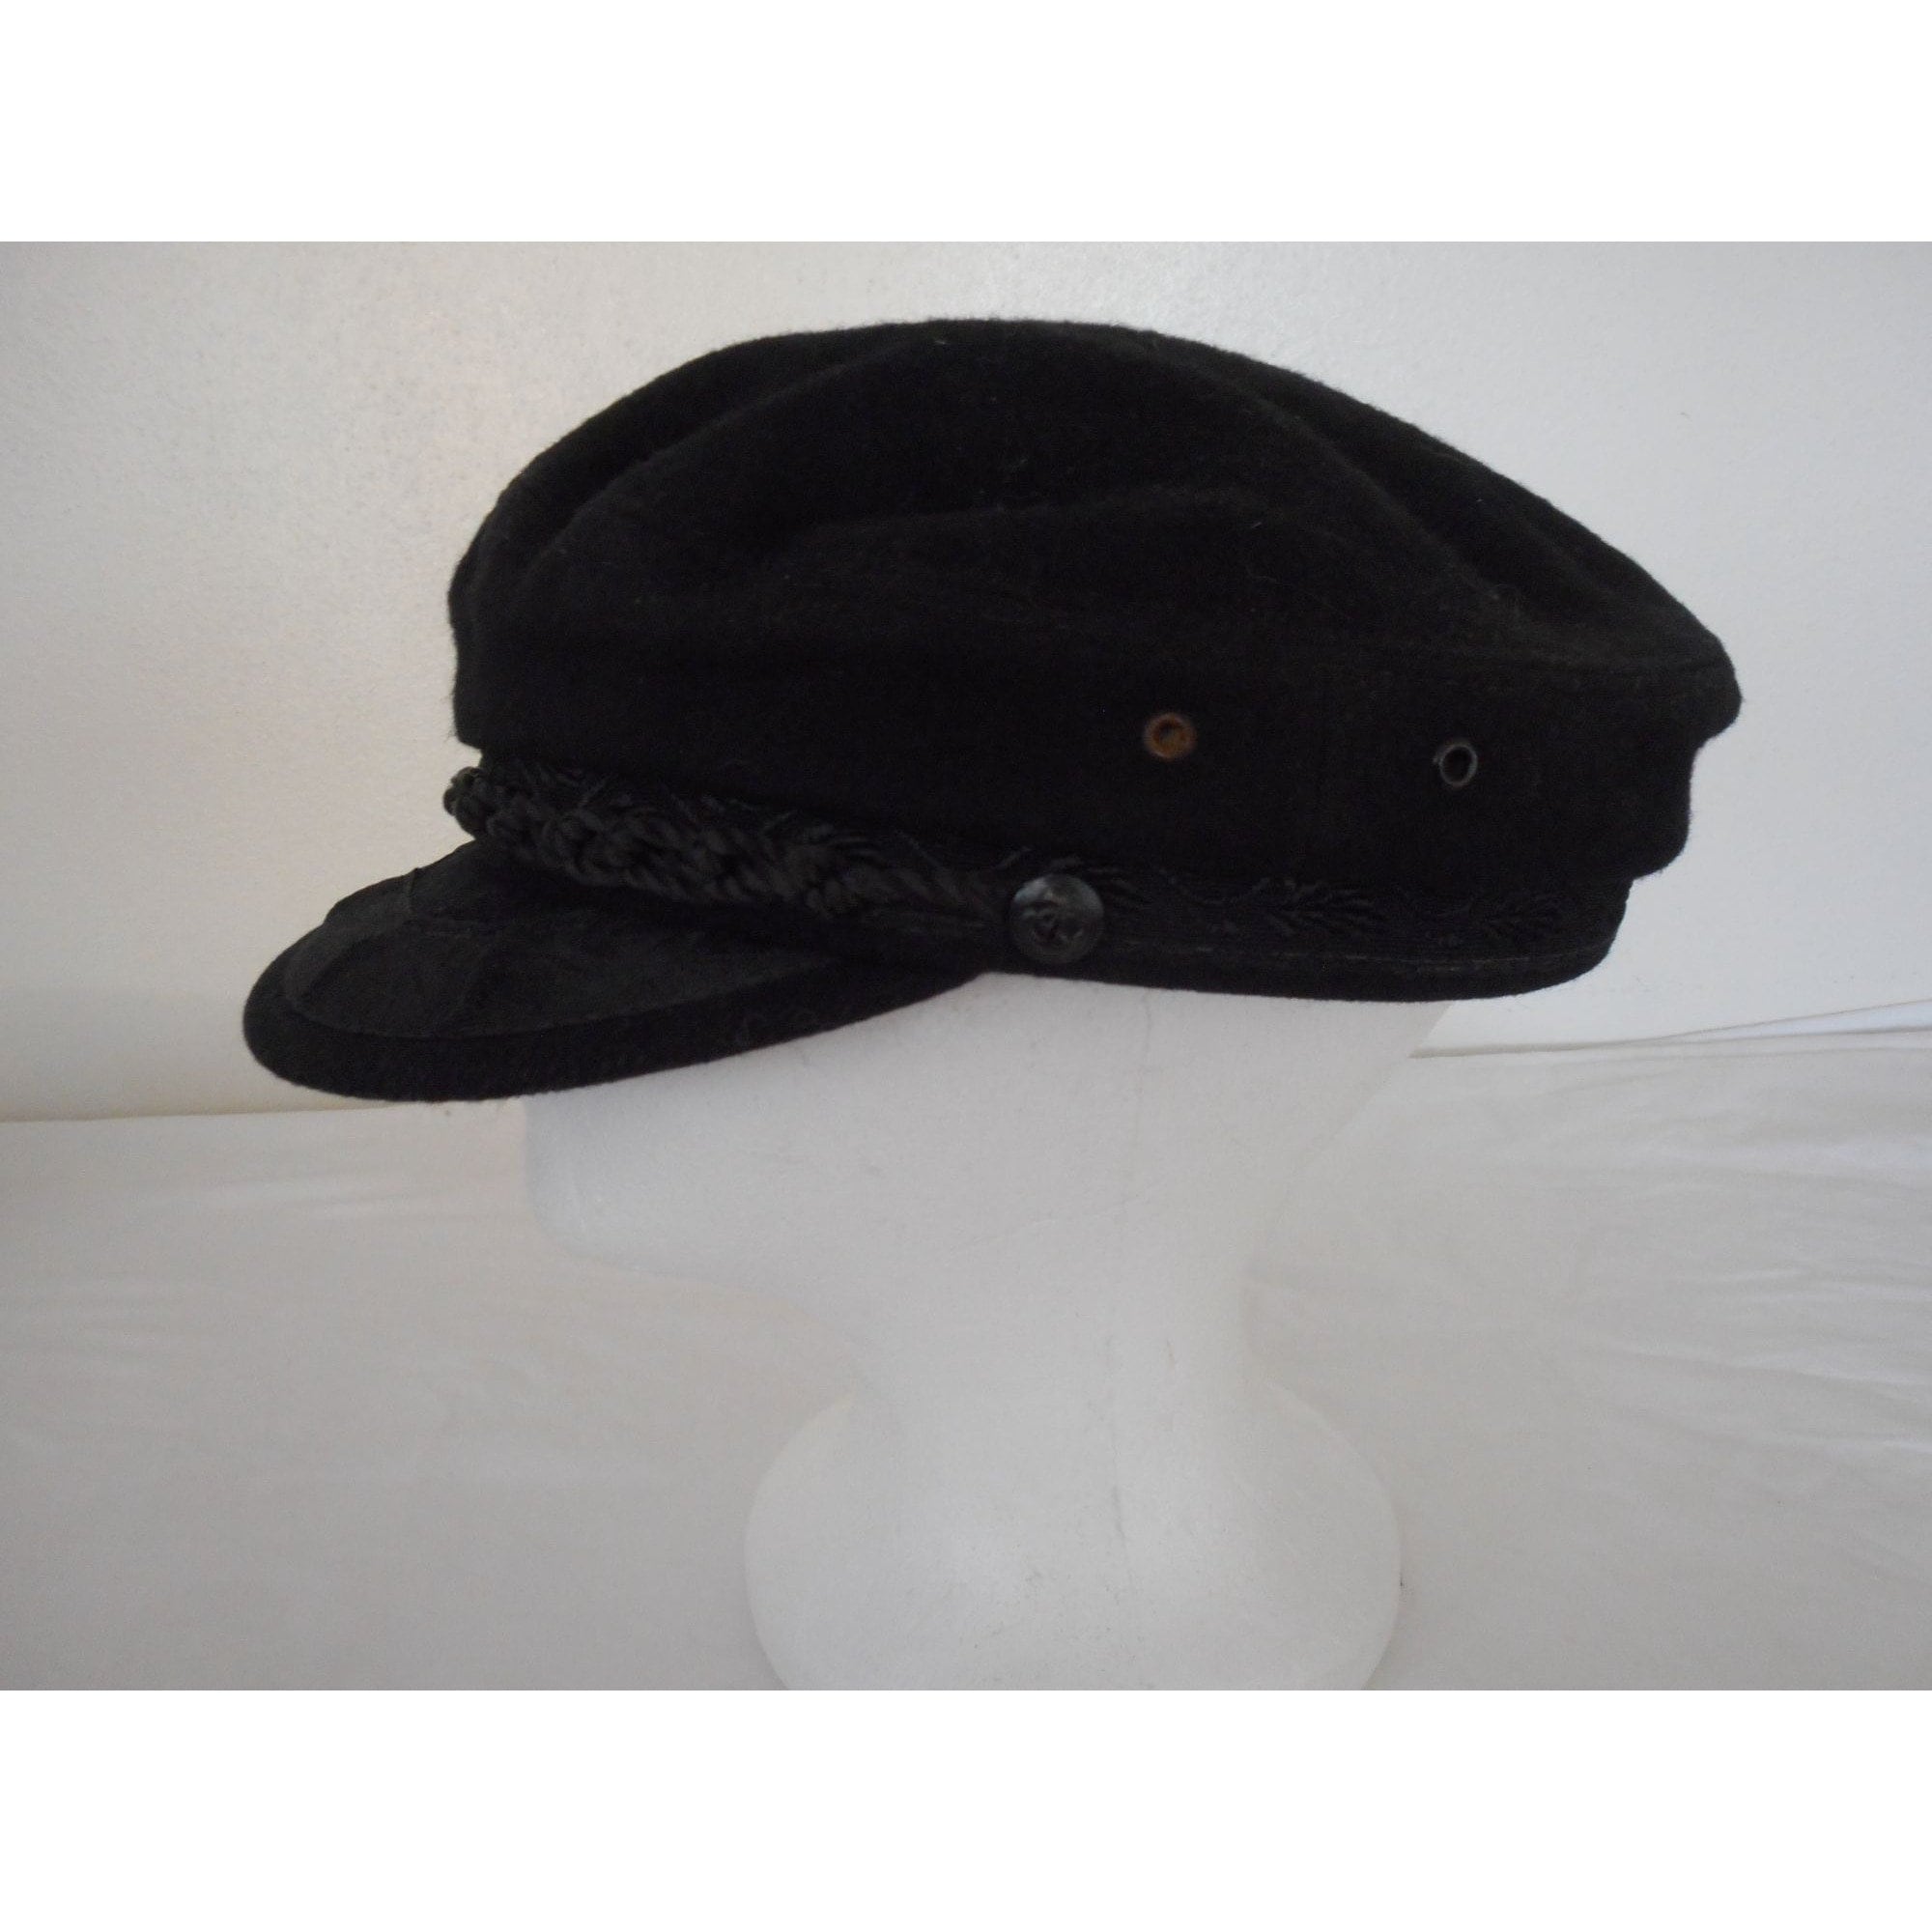 Vintage Woolen Greek Fisherman's Cap Hat Black Made in Greece